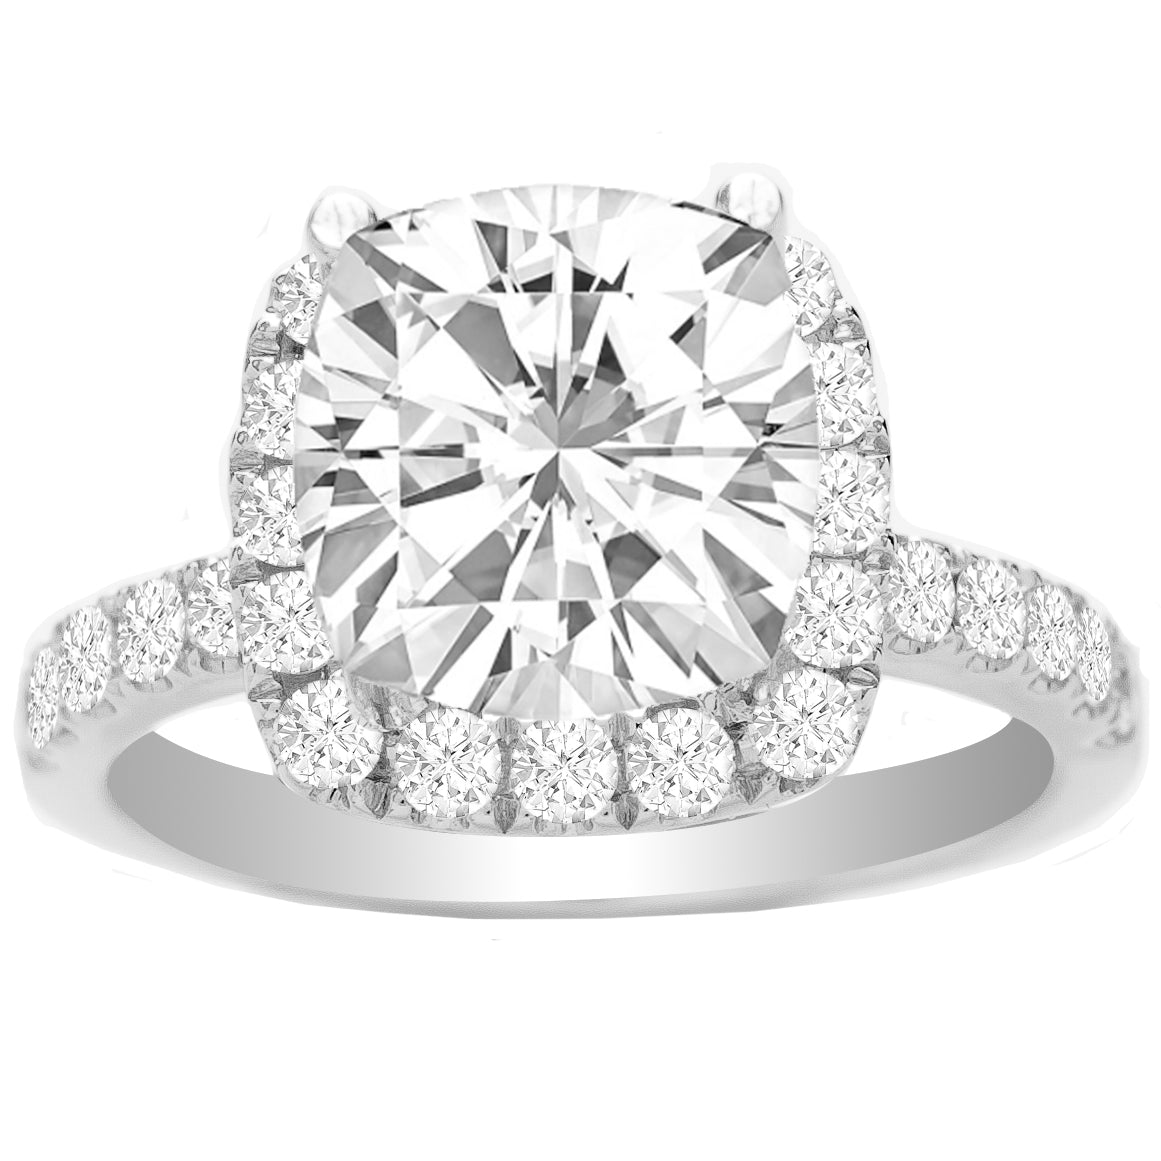 Jendara Diamond Engagement Ring in 14K White Gold; 0.66 ctw